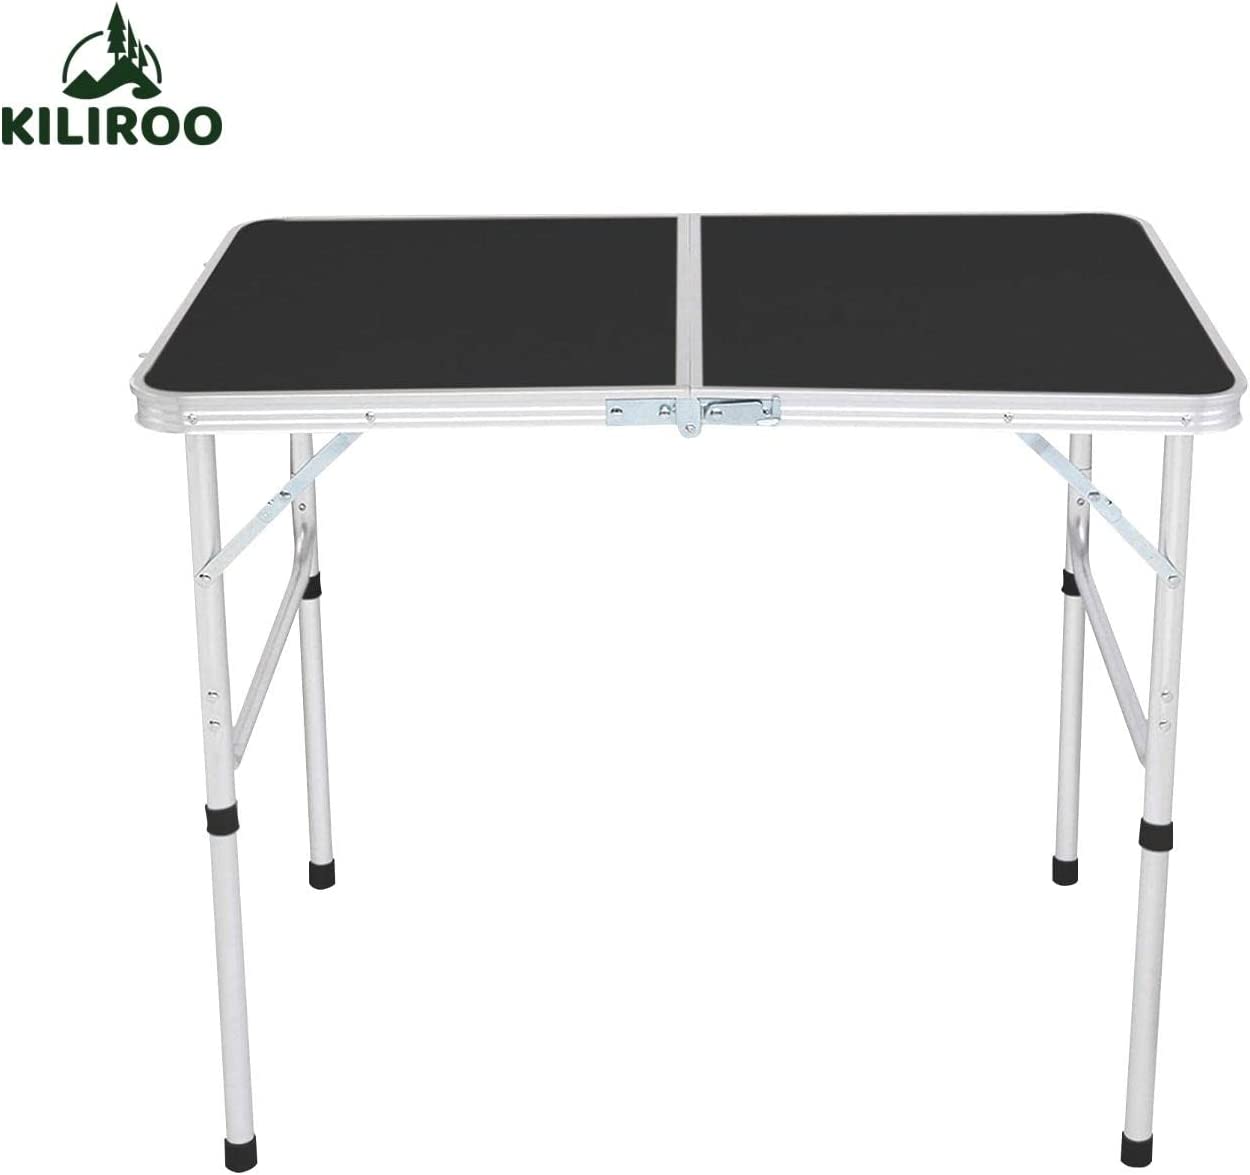 KILIROO Camping Table 90cm Black